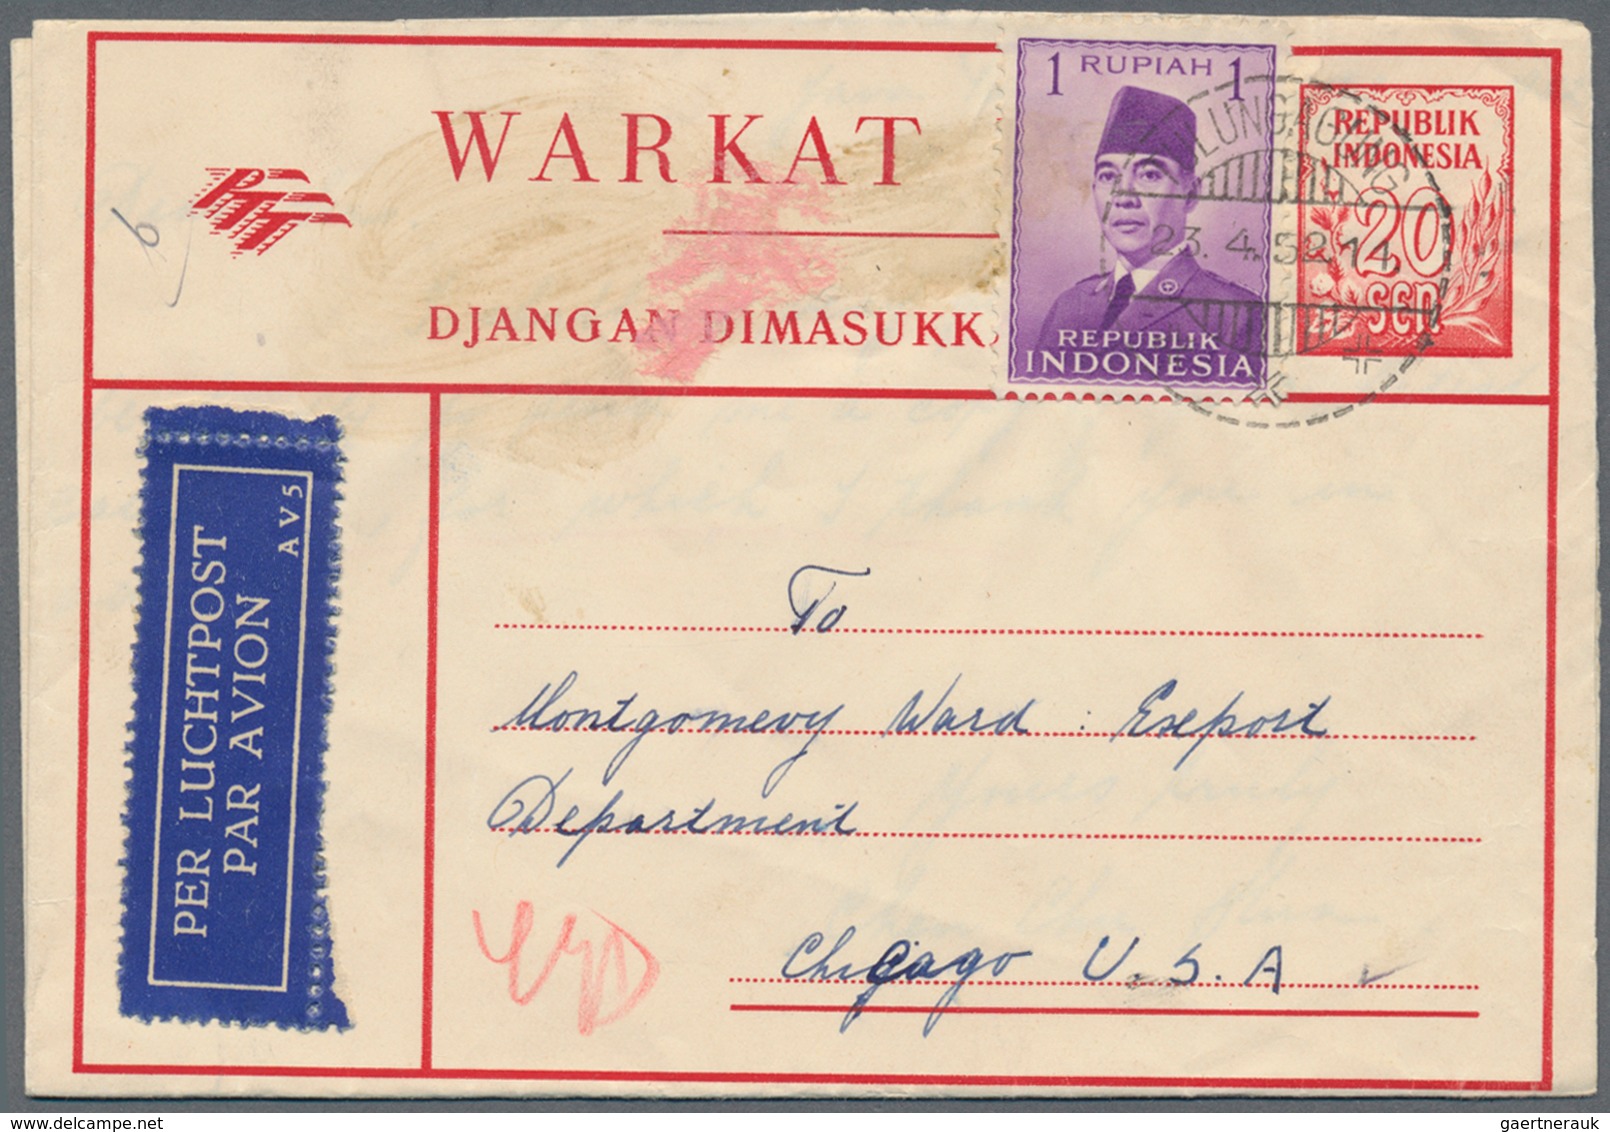 Indonesien: 1949/97 (ca.), stationery envelopes (warkat pos / postblad) specialized stock: 10 S. (mi